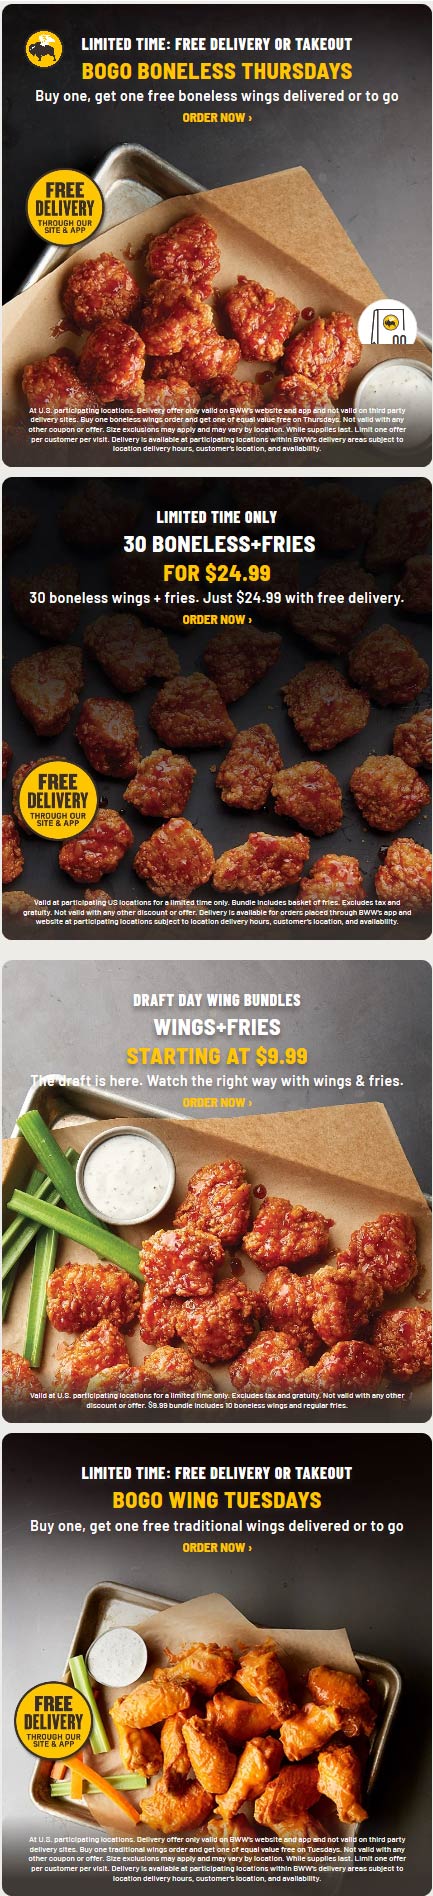 Buffalo Wild Wings restaurants Coupon  2nd boneless wings free & more today at Buffalo Wild Wings restaurants (04/23)